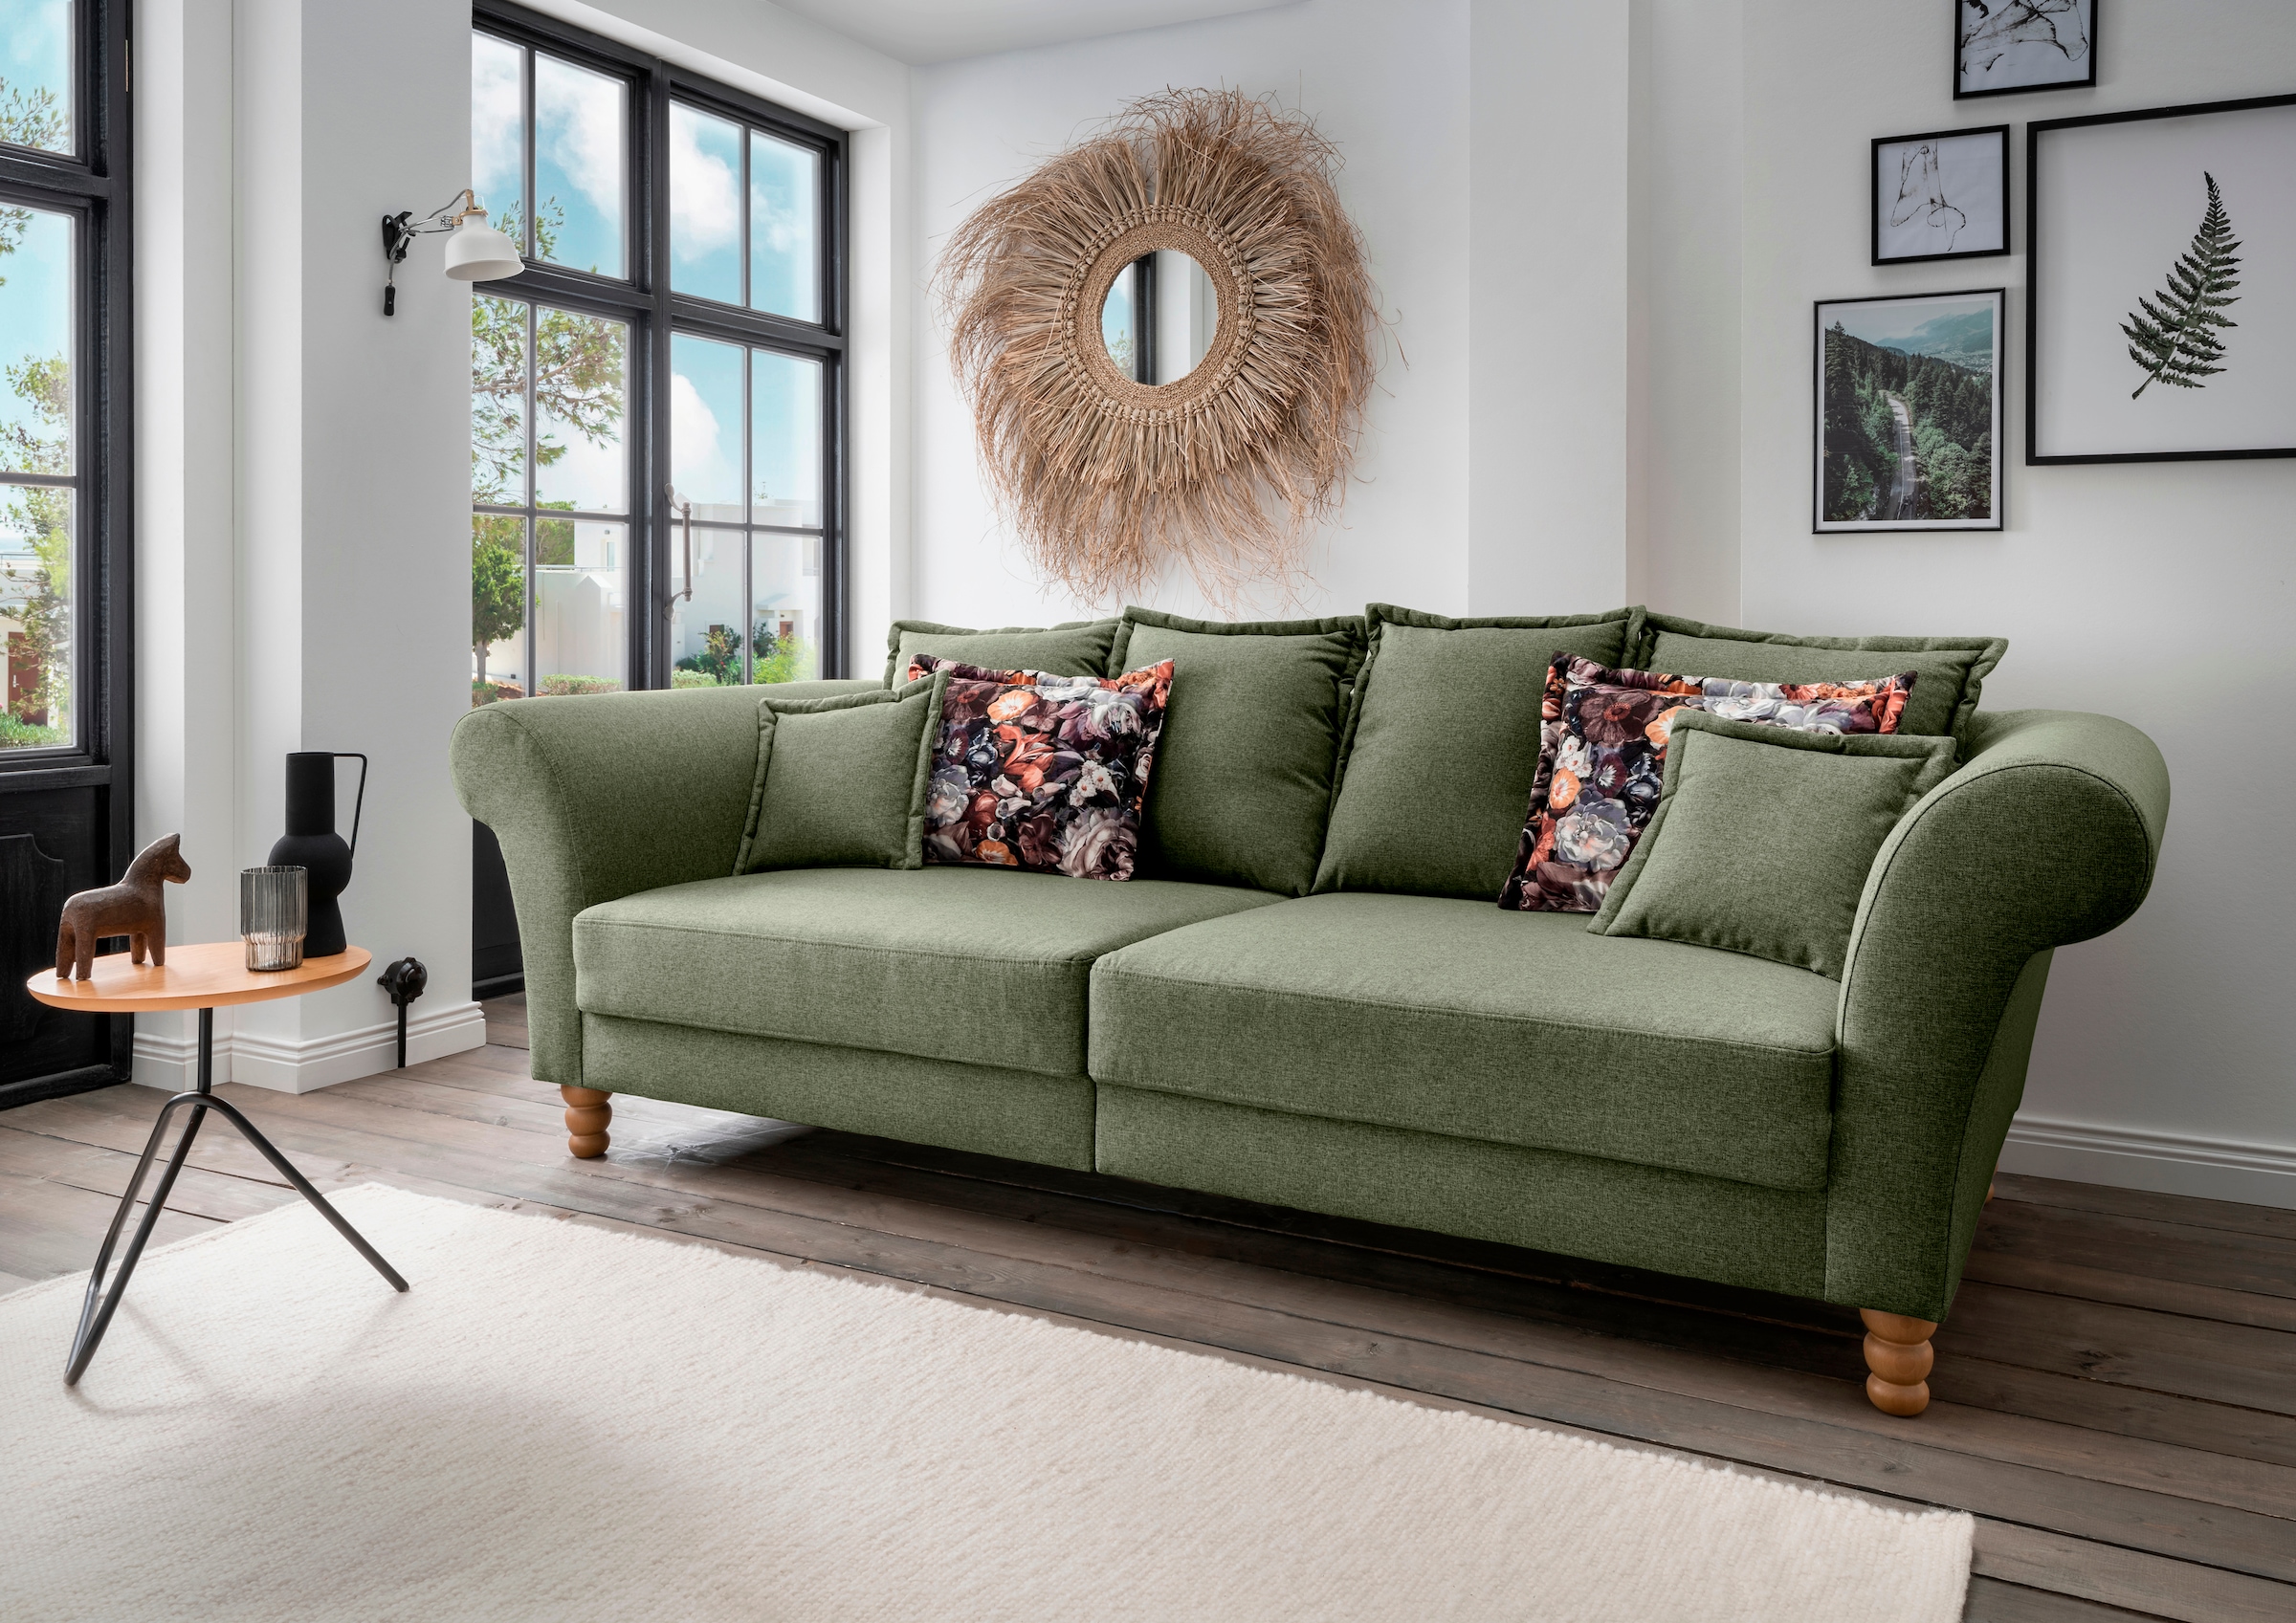 Home affaire Big-Sofa »Tassilo« kaufen bei OTTO